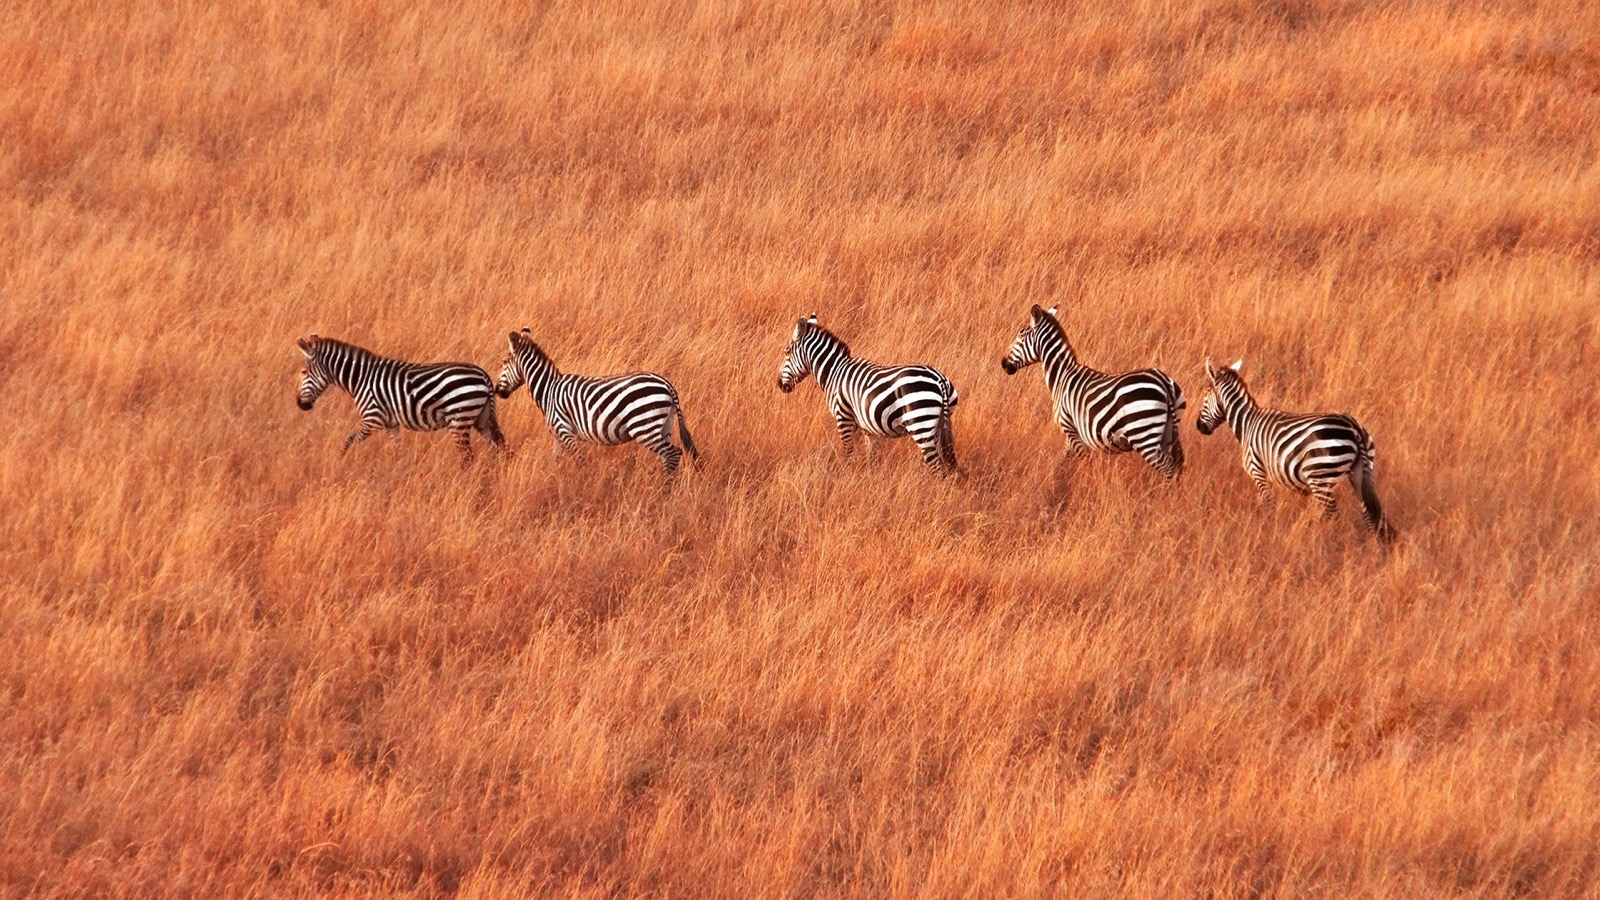 African Countries In 3 Clues Zebras at Maasai Mara savanna, Kenya